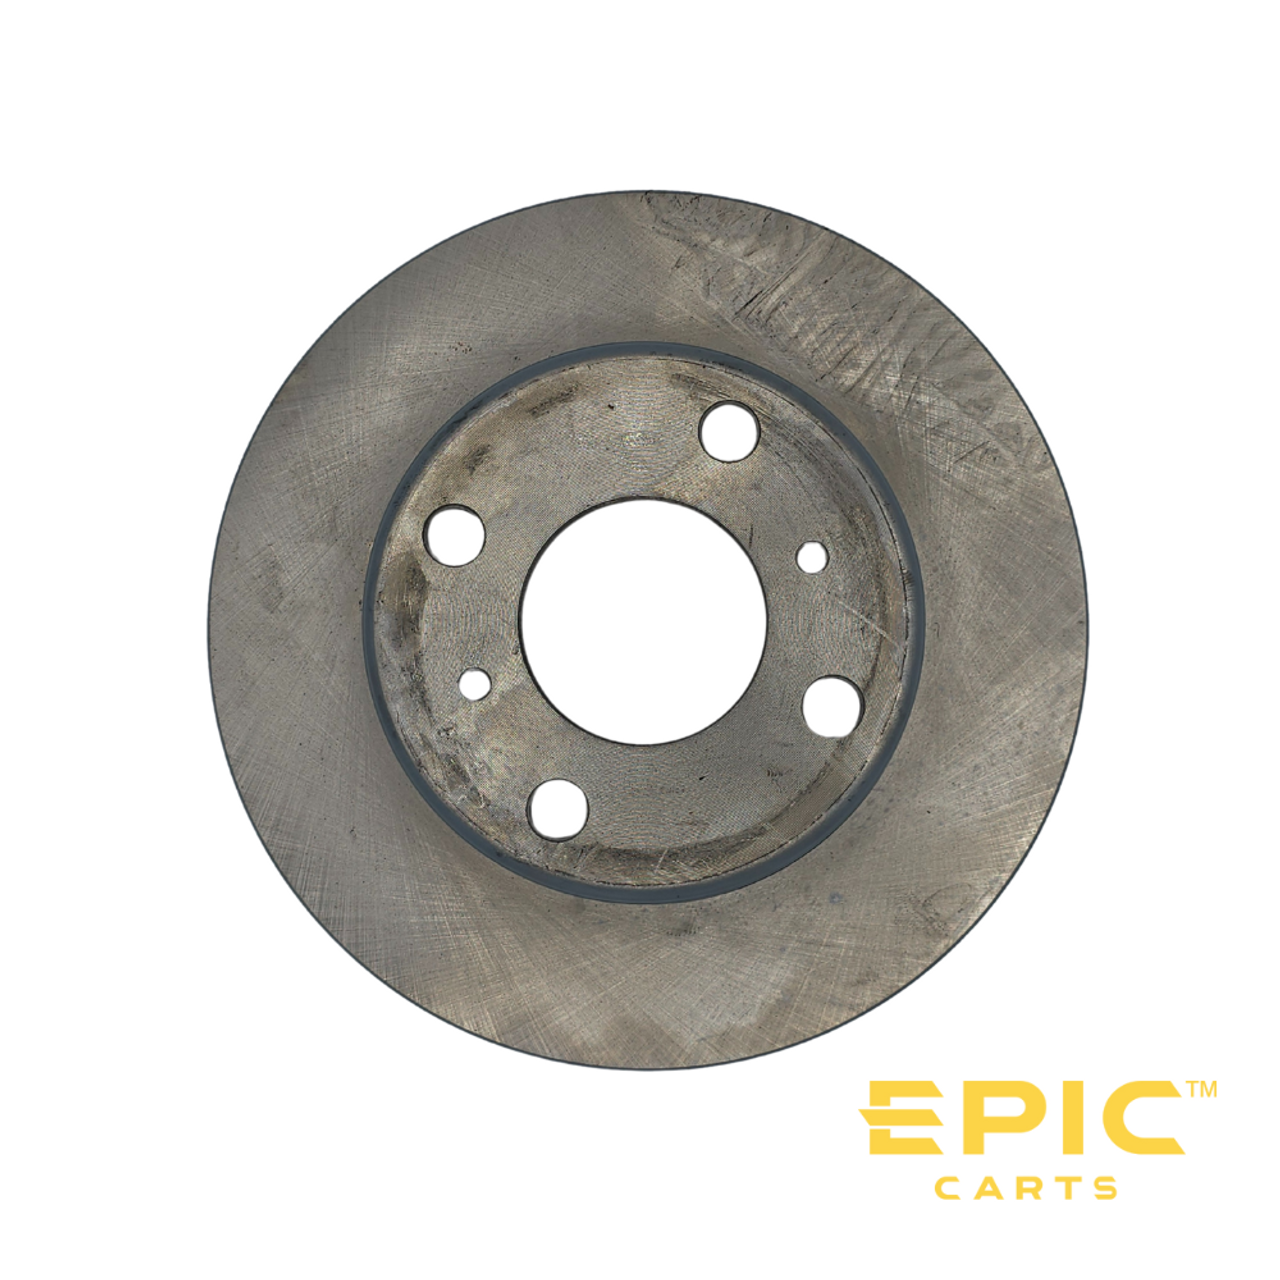 Rear Rotor Brake Disc (set of 2) for EPIC E20, E40, E40F, E60 Golf Carts, BRAK-EP504X2, 3600001082